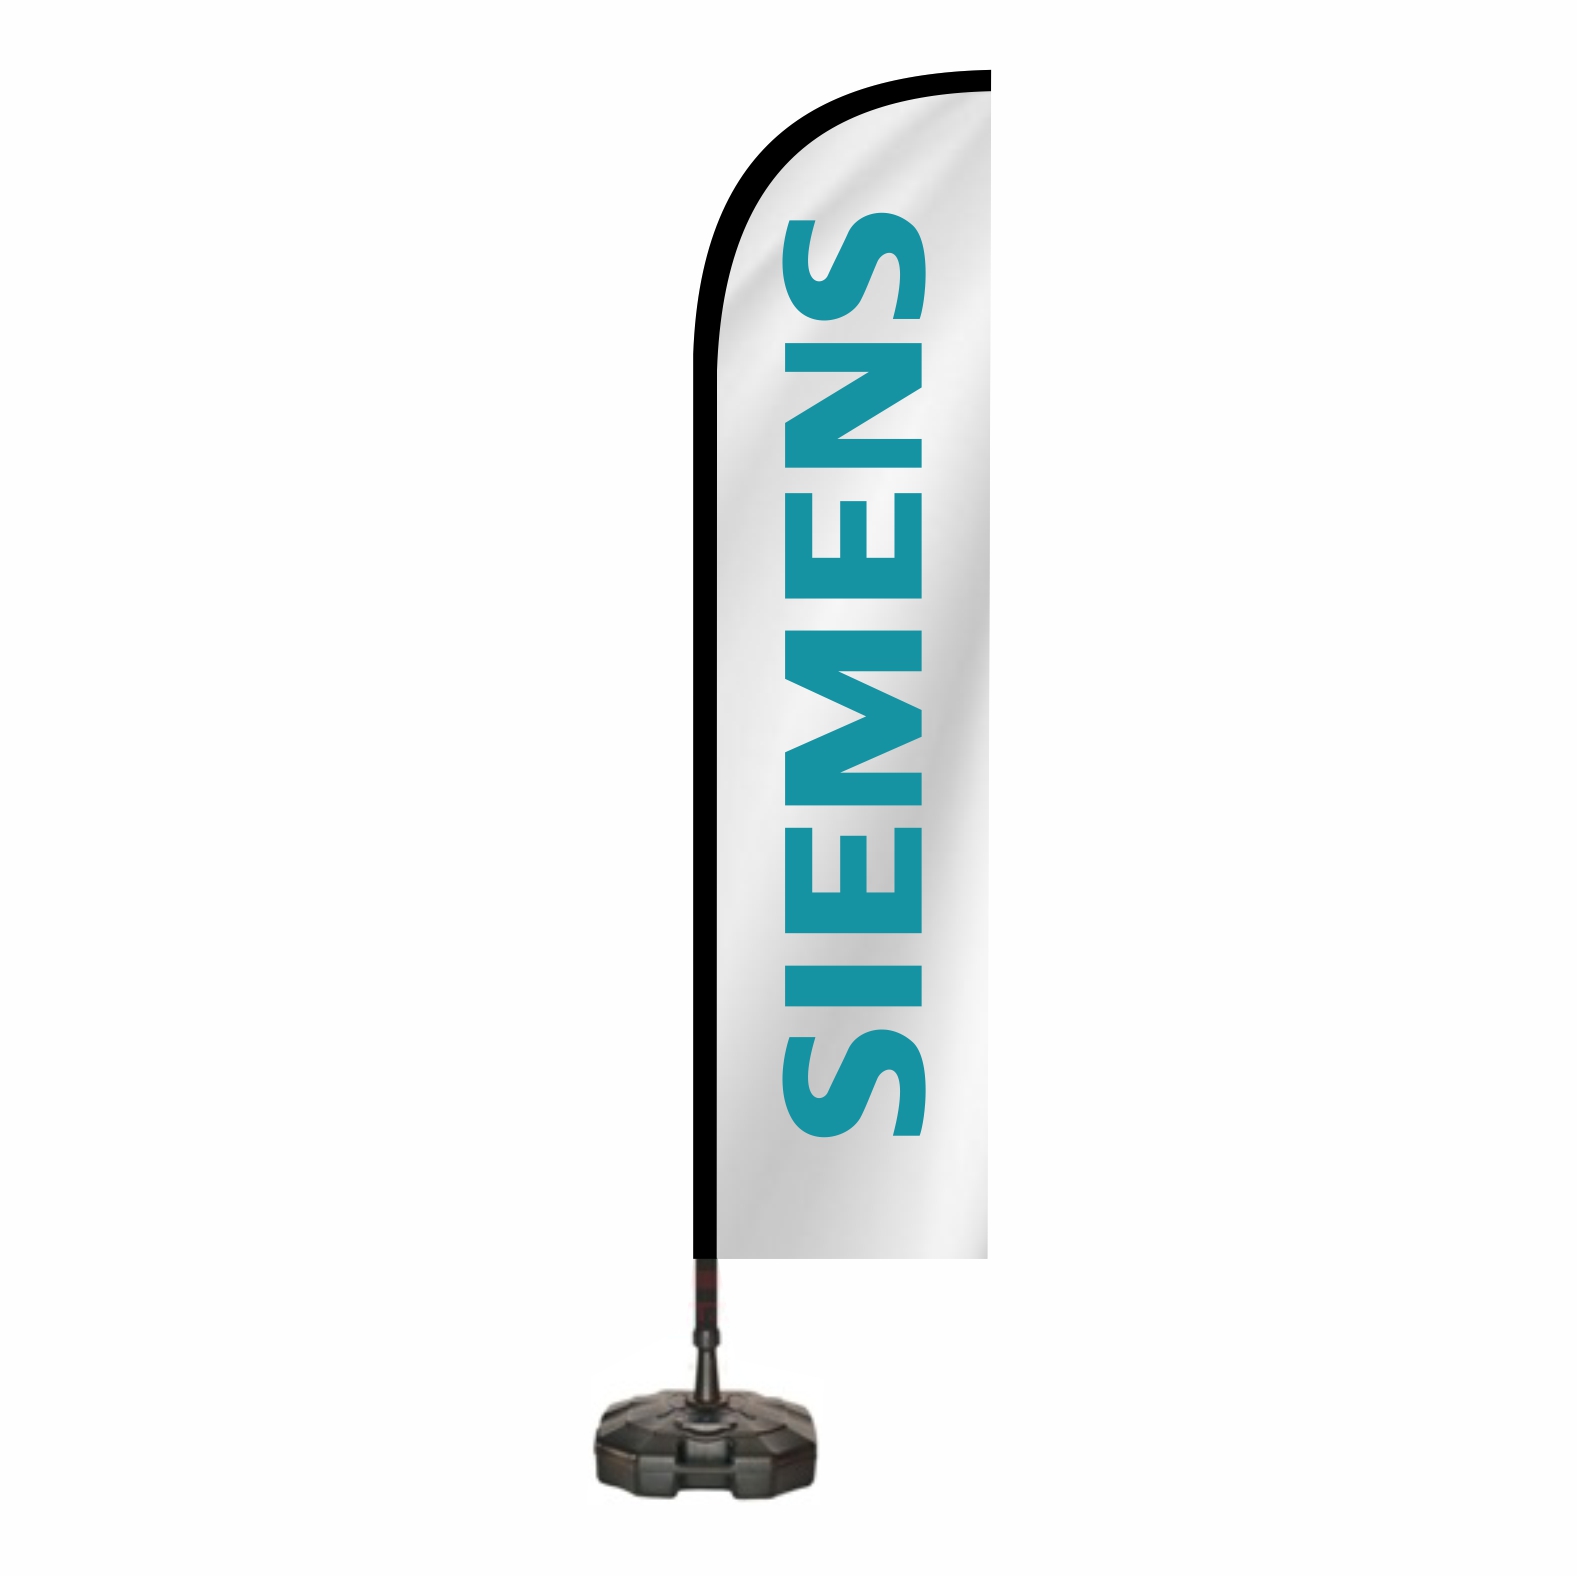 Siemens Yelken Bayraklar